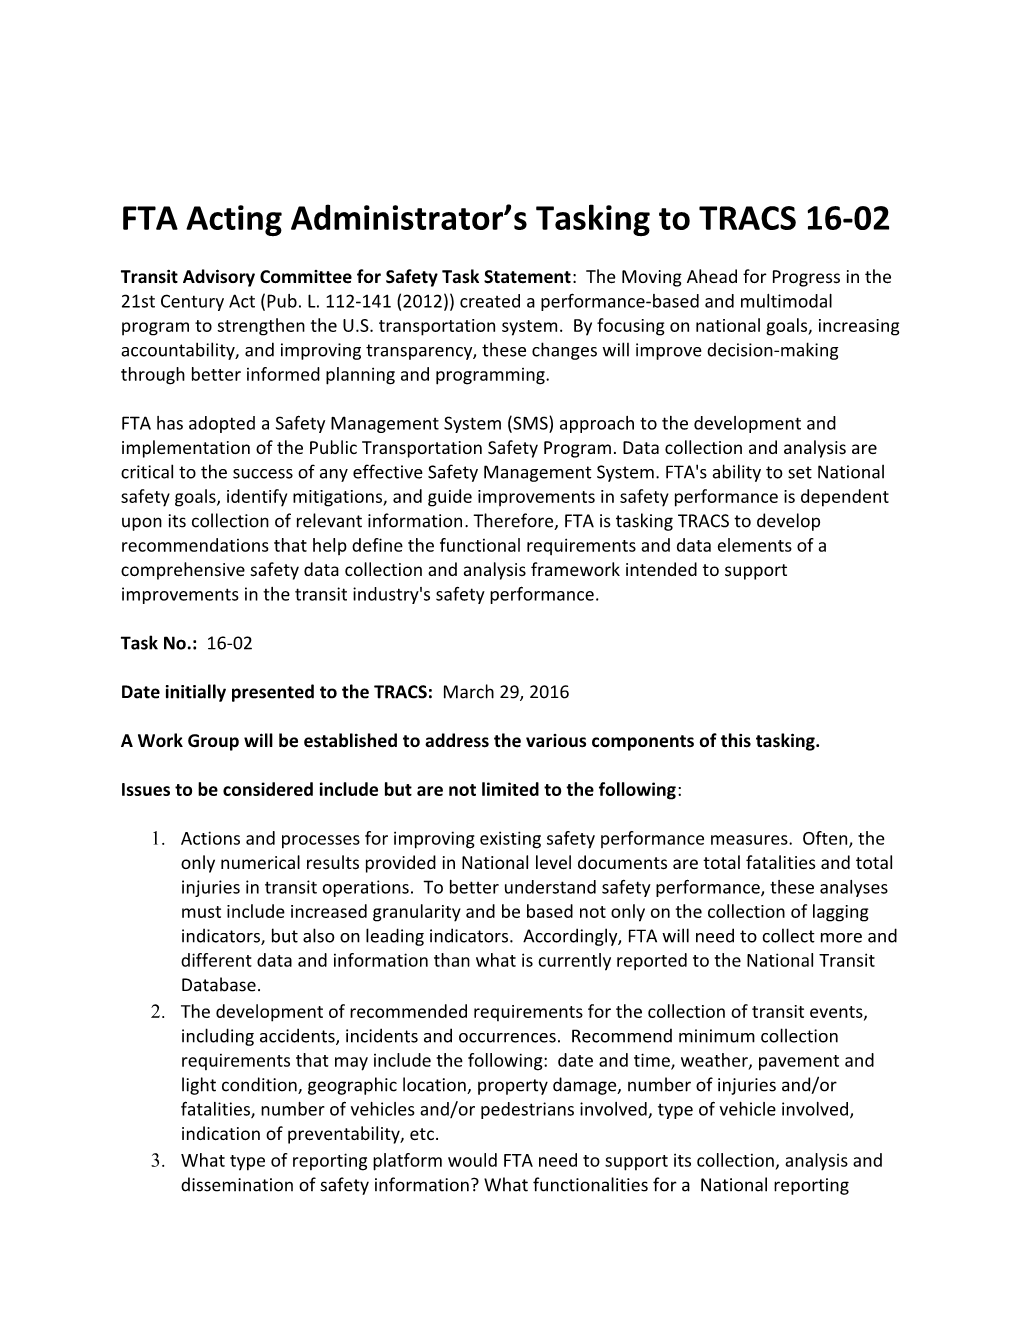 FTA Acting Administrator Stasking to TRACS 16-02